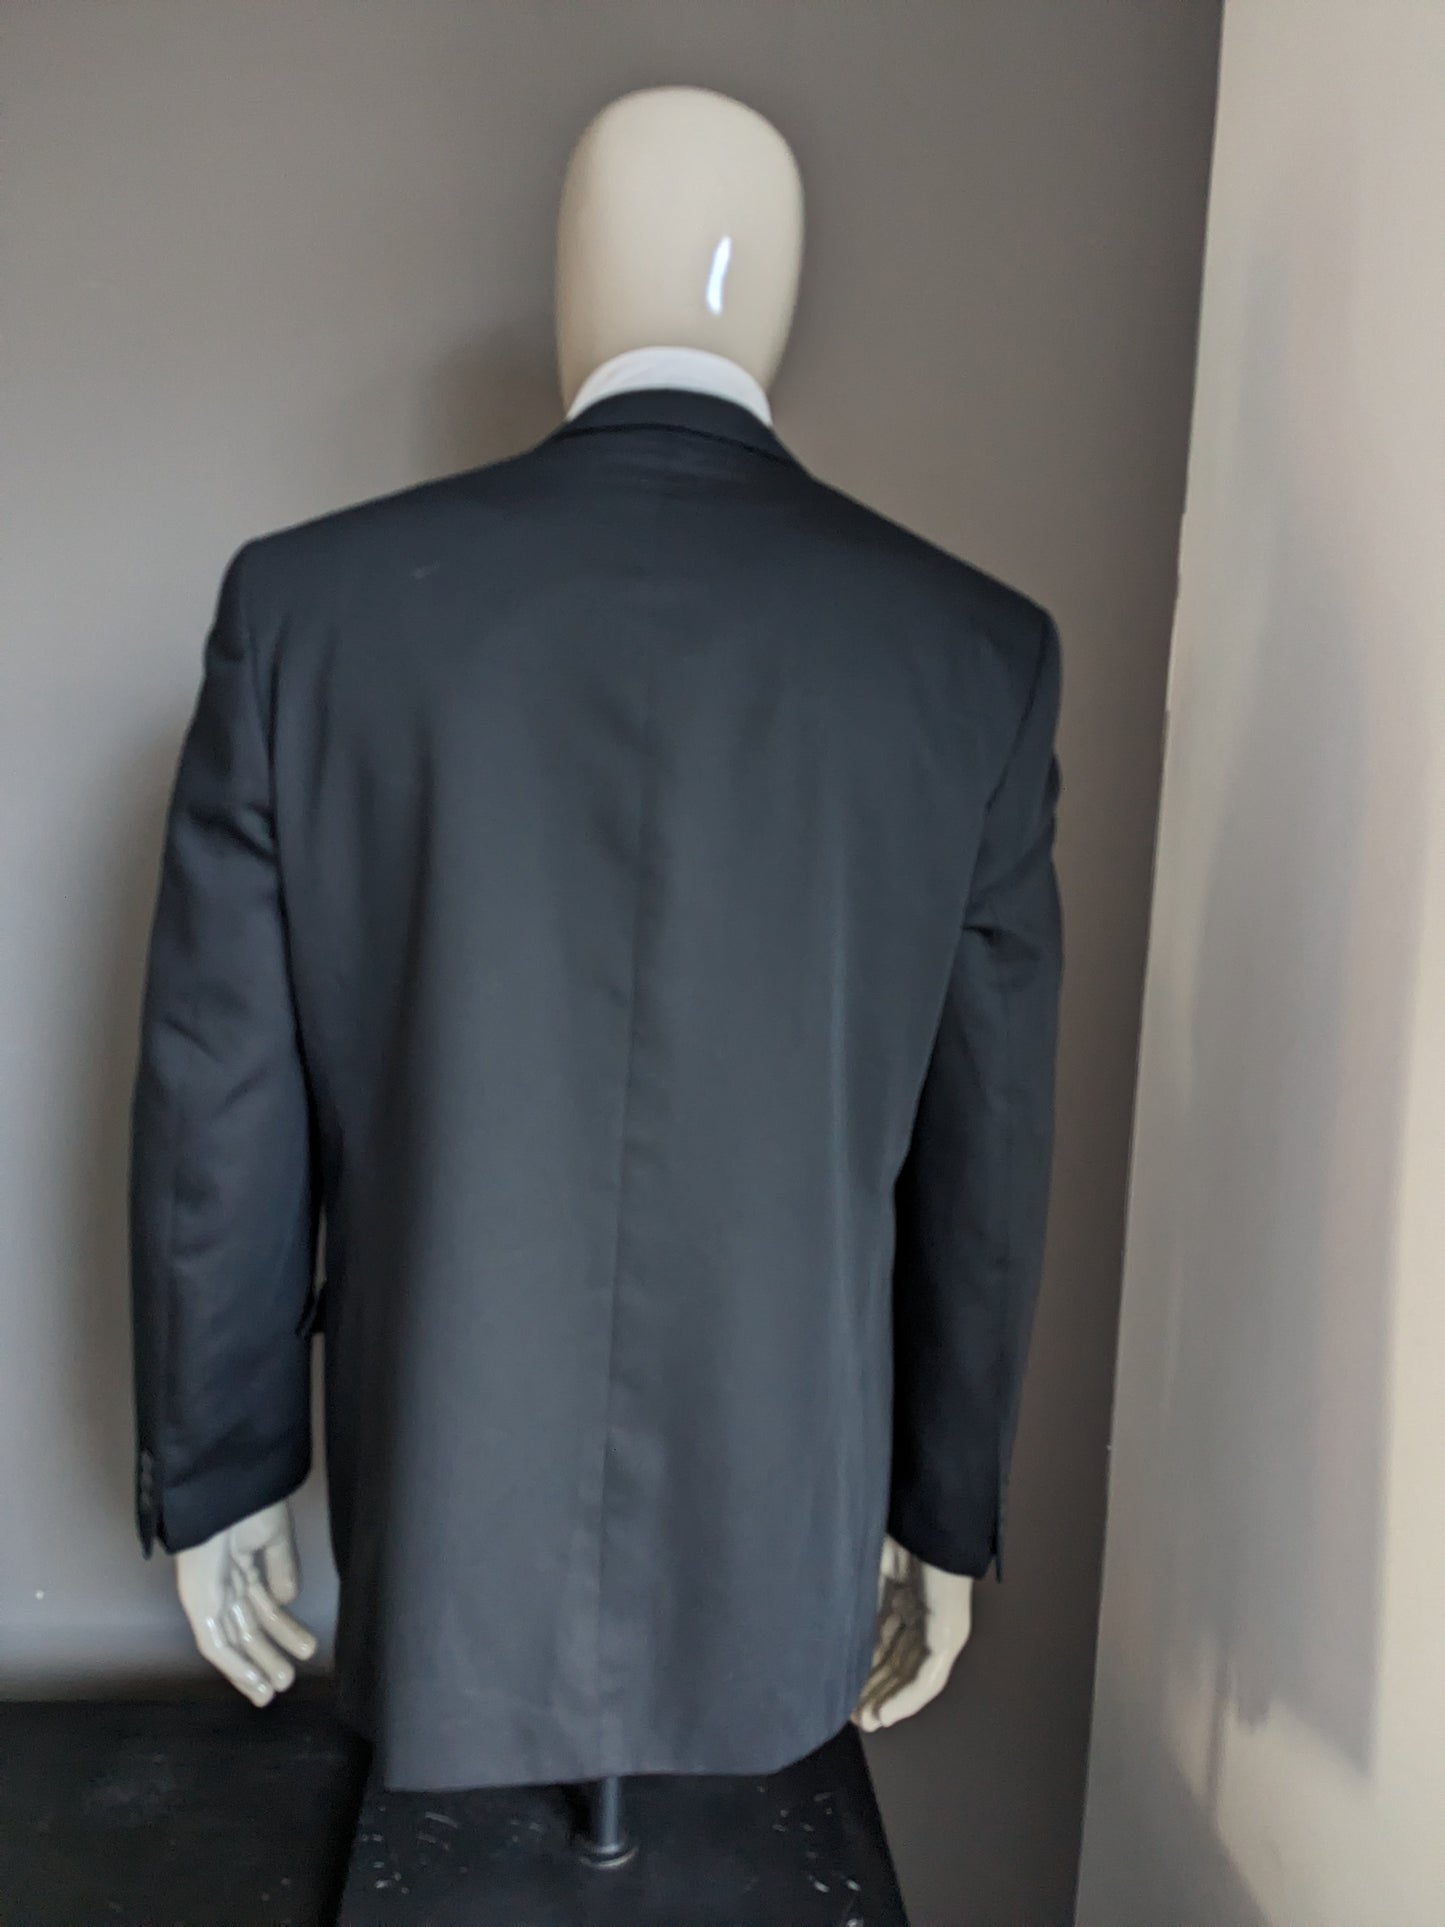 Burton's jacket. Black colored. Size 52 / L. Regular.